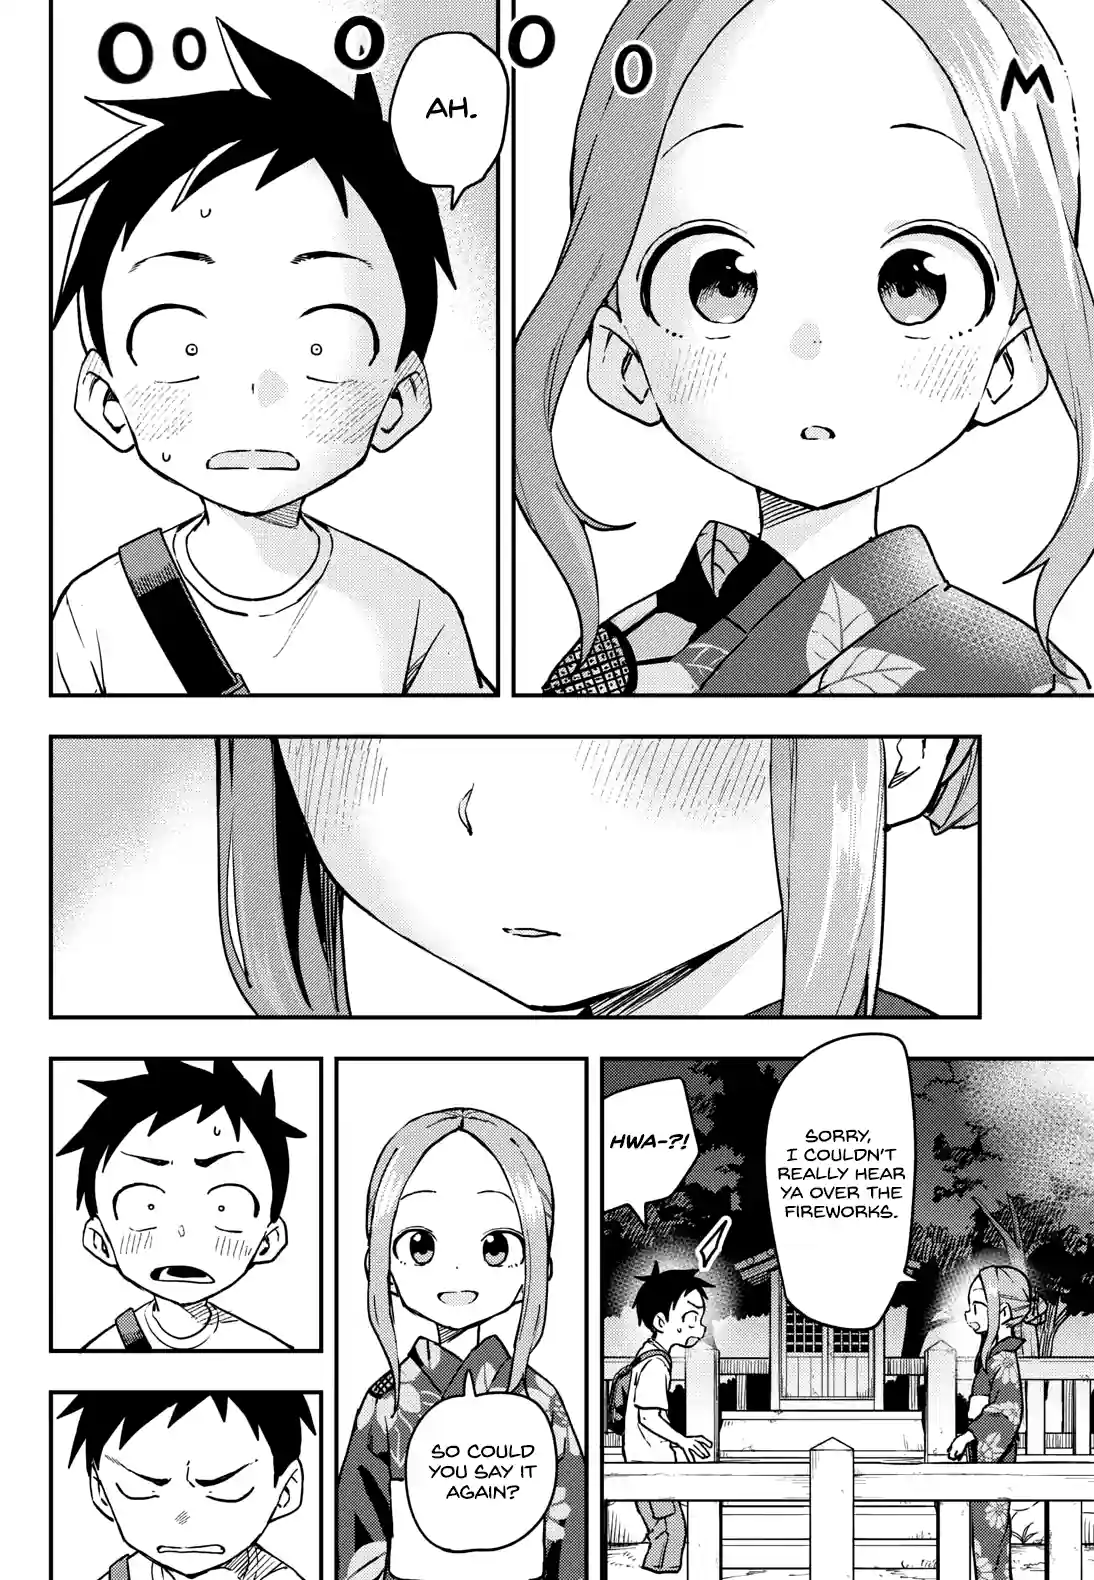 How did Takagi-san Manga End